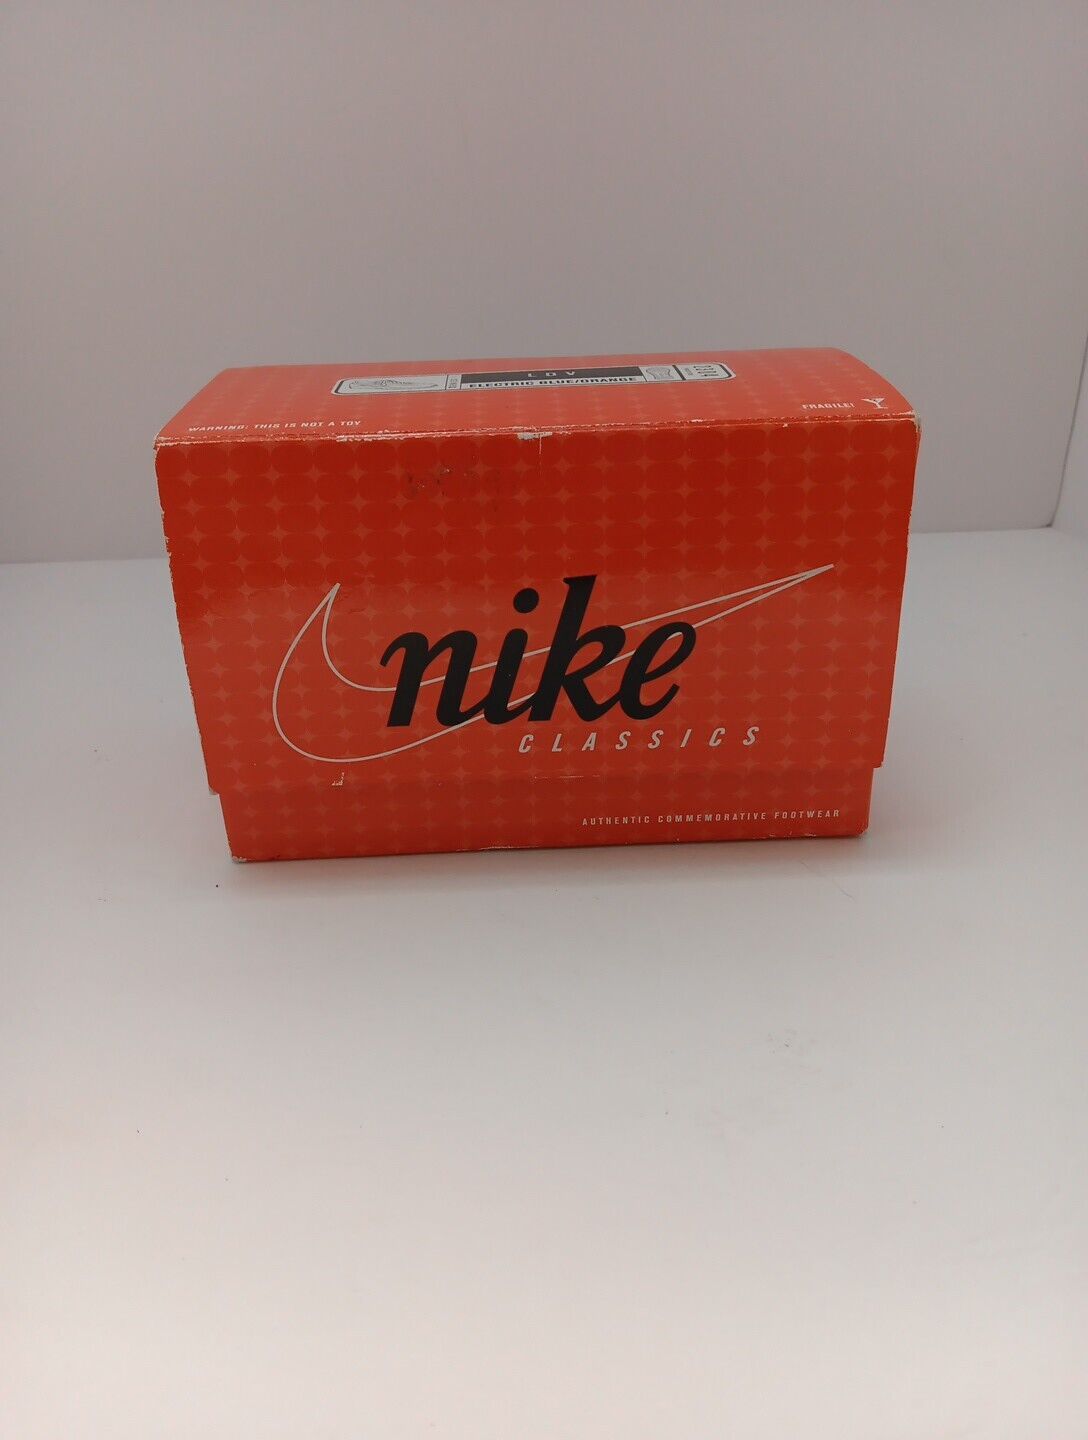 Nike Classics Authentic Commemorative Footwear Air Max Plus Sealed Series One